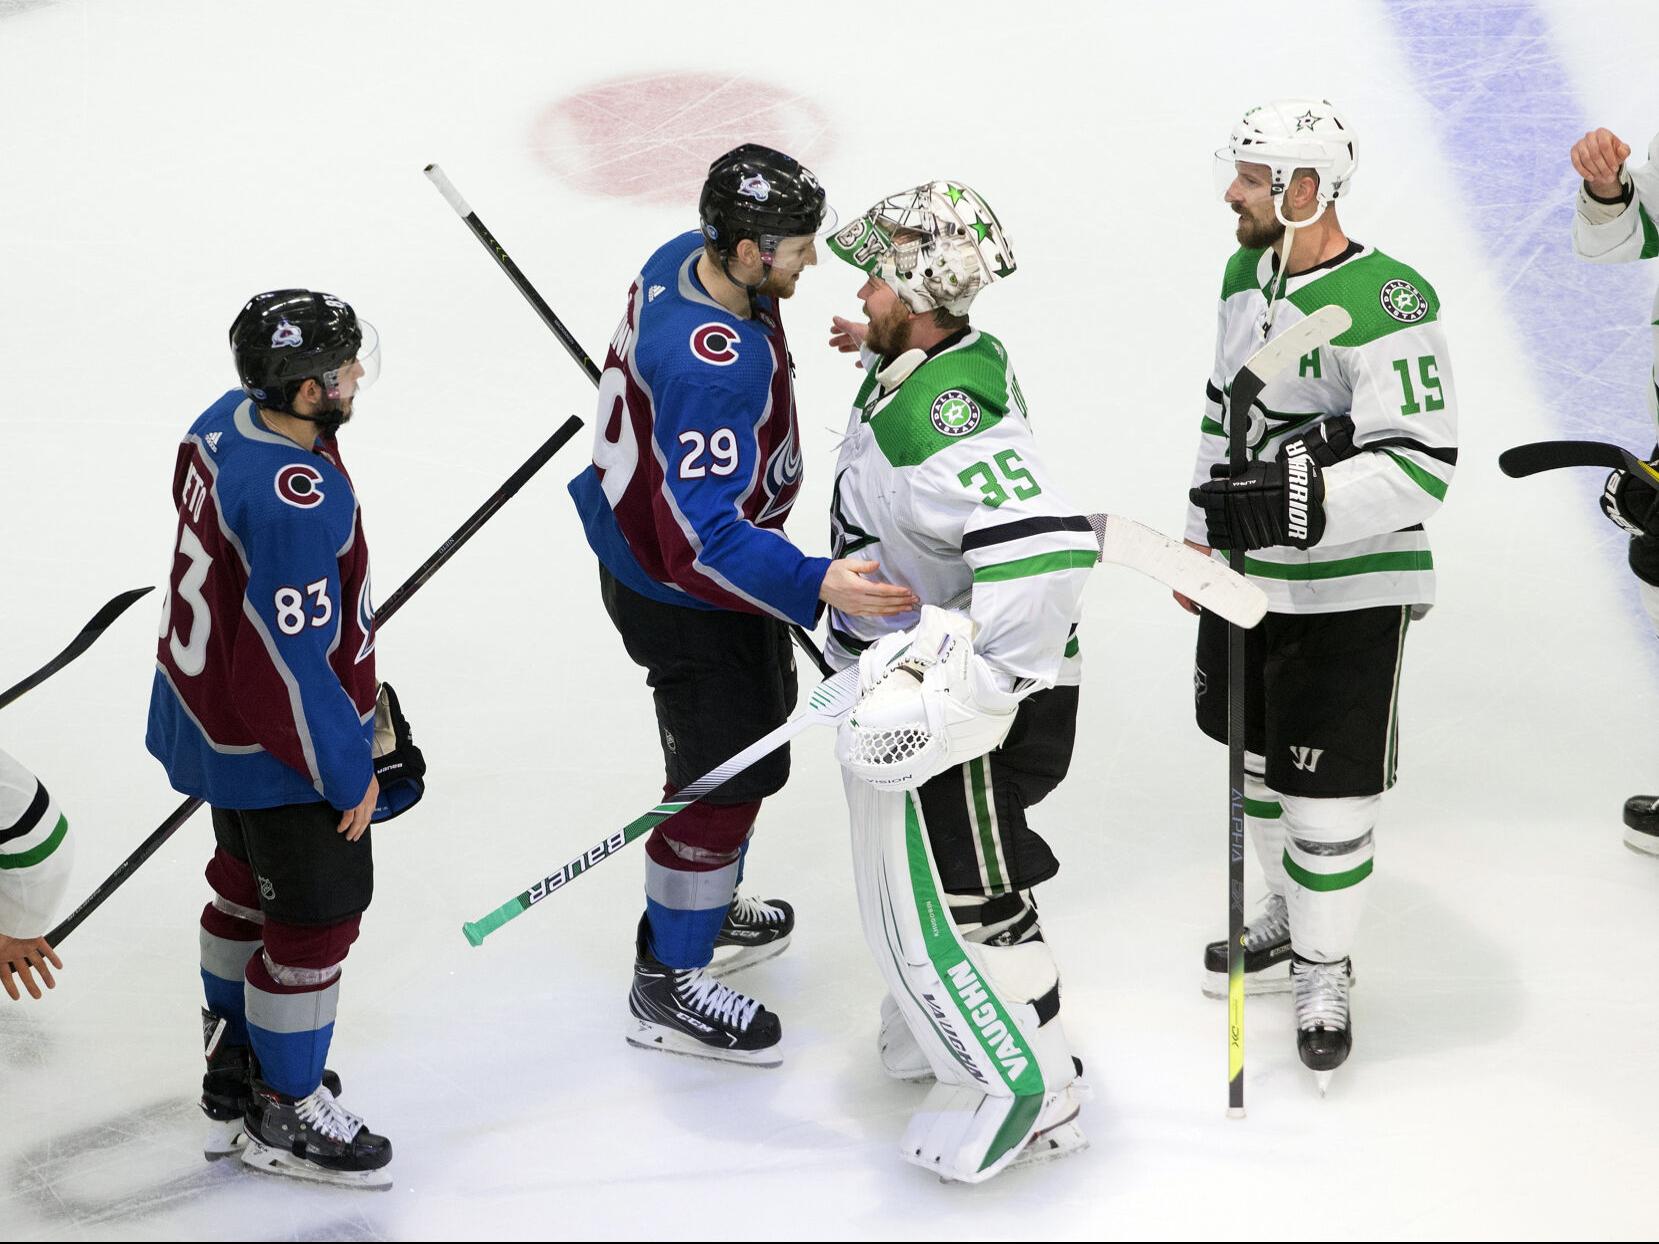 NHL playoffs: Avalanche captain Gabriel Landeskog cut by skate on leg